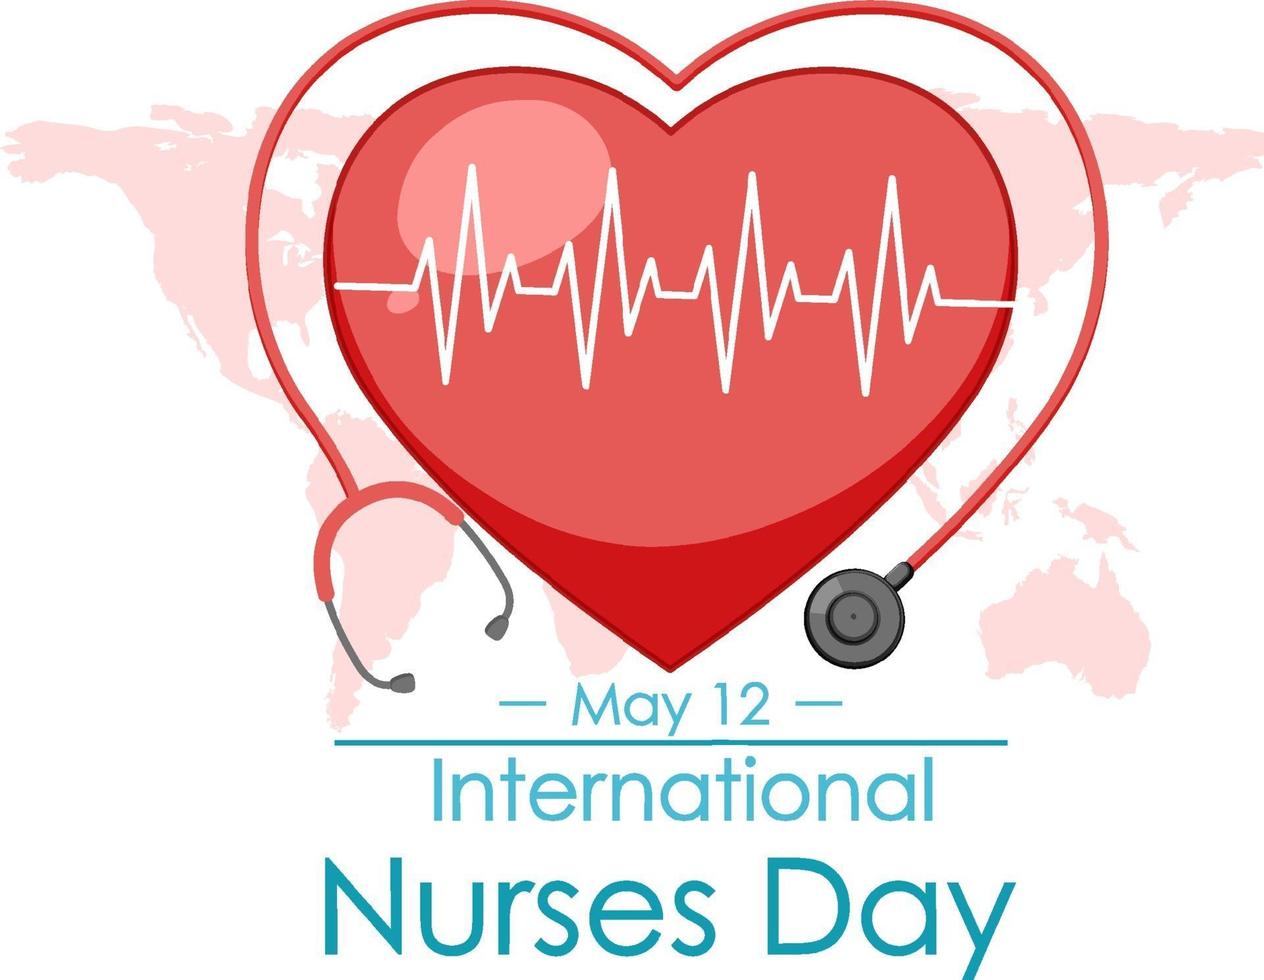 Happy International Nurses Day font with stethoscope symbol